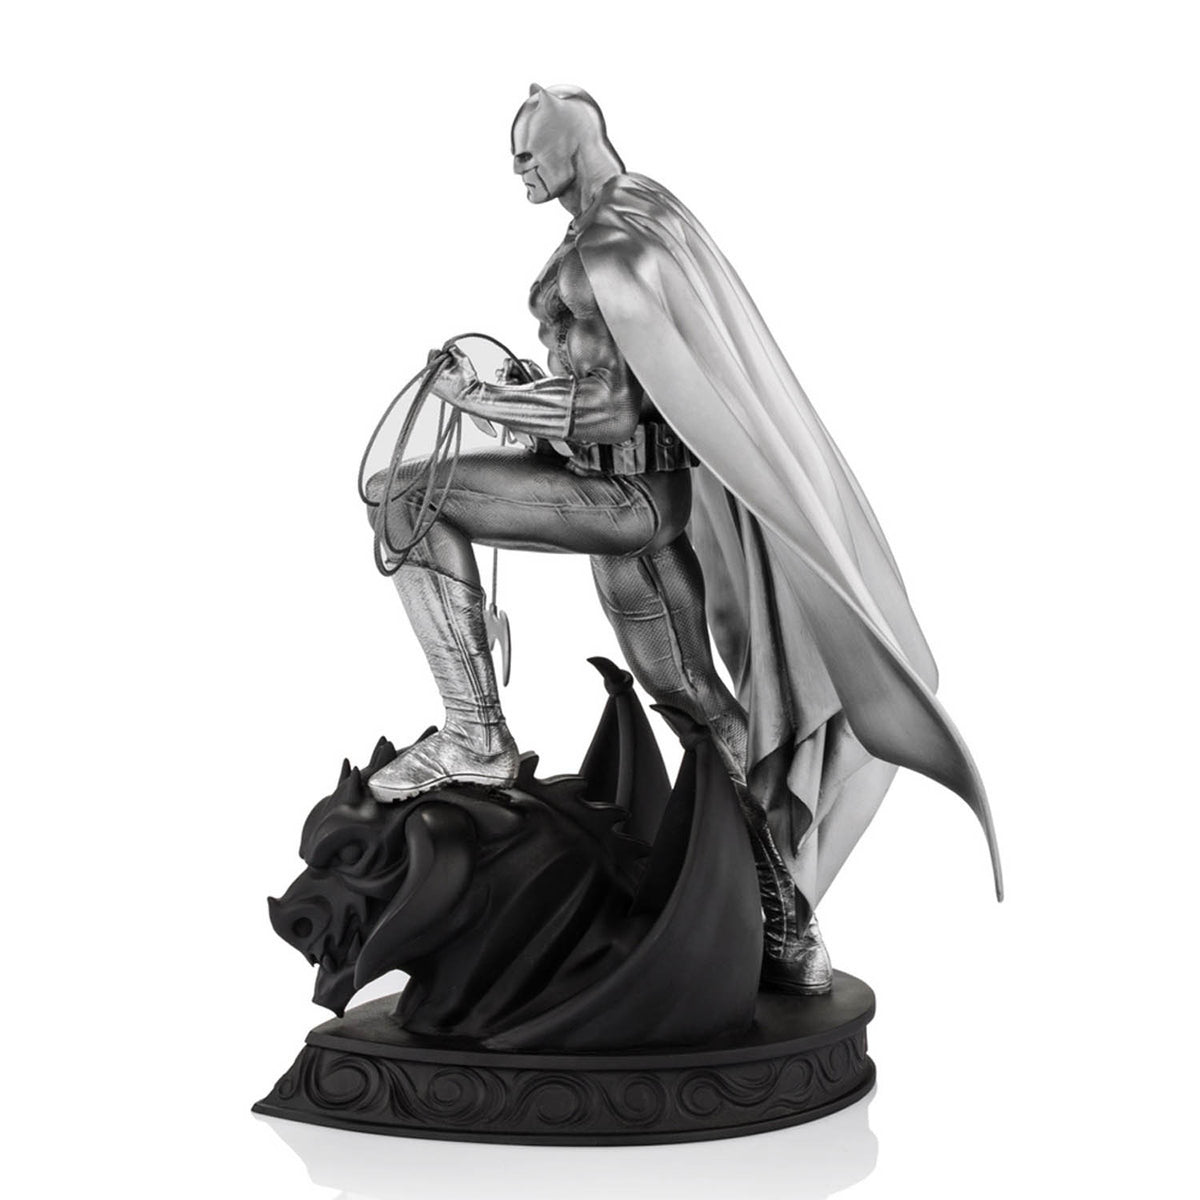 Limited Edition Batman Figurine